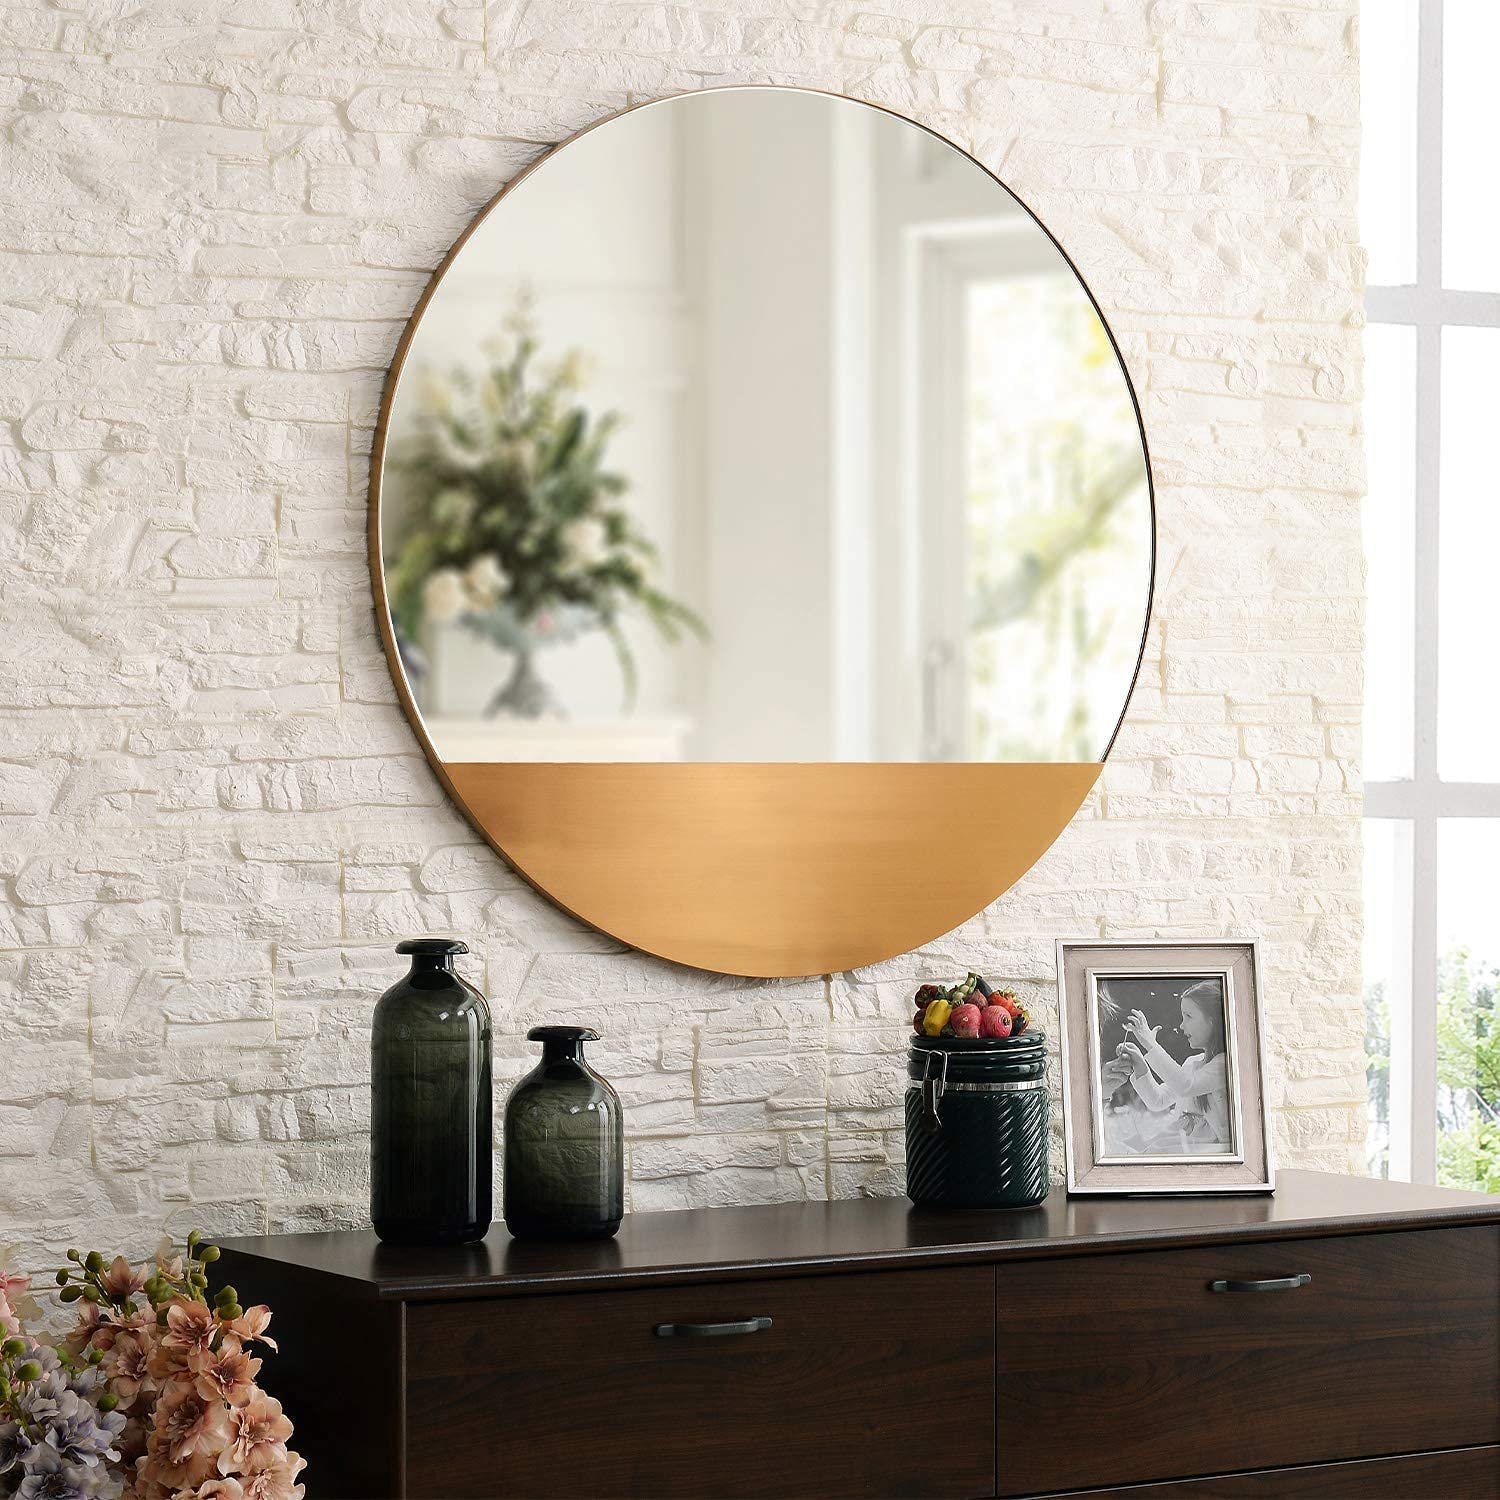 32" Half-gold mirror, $160